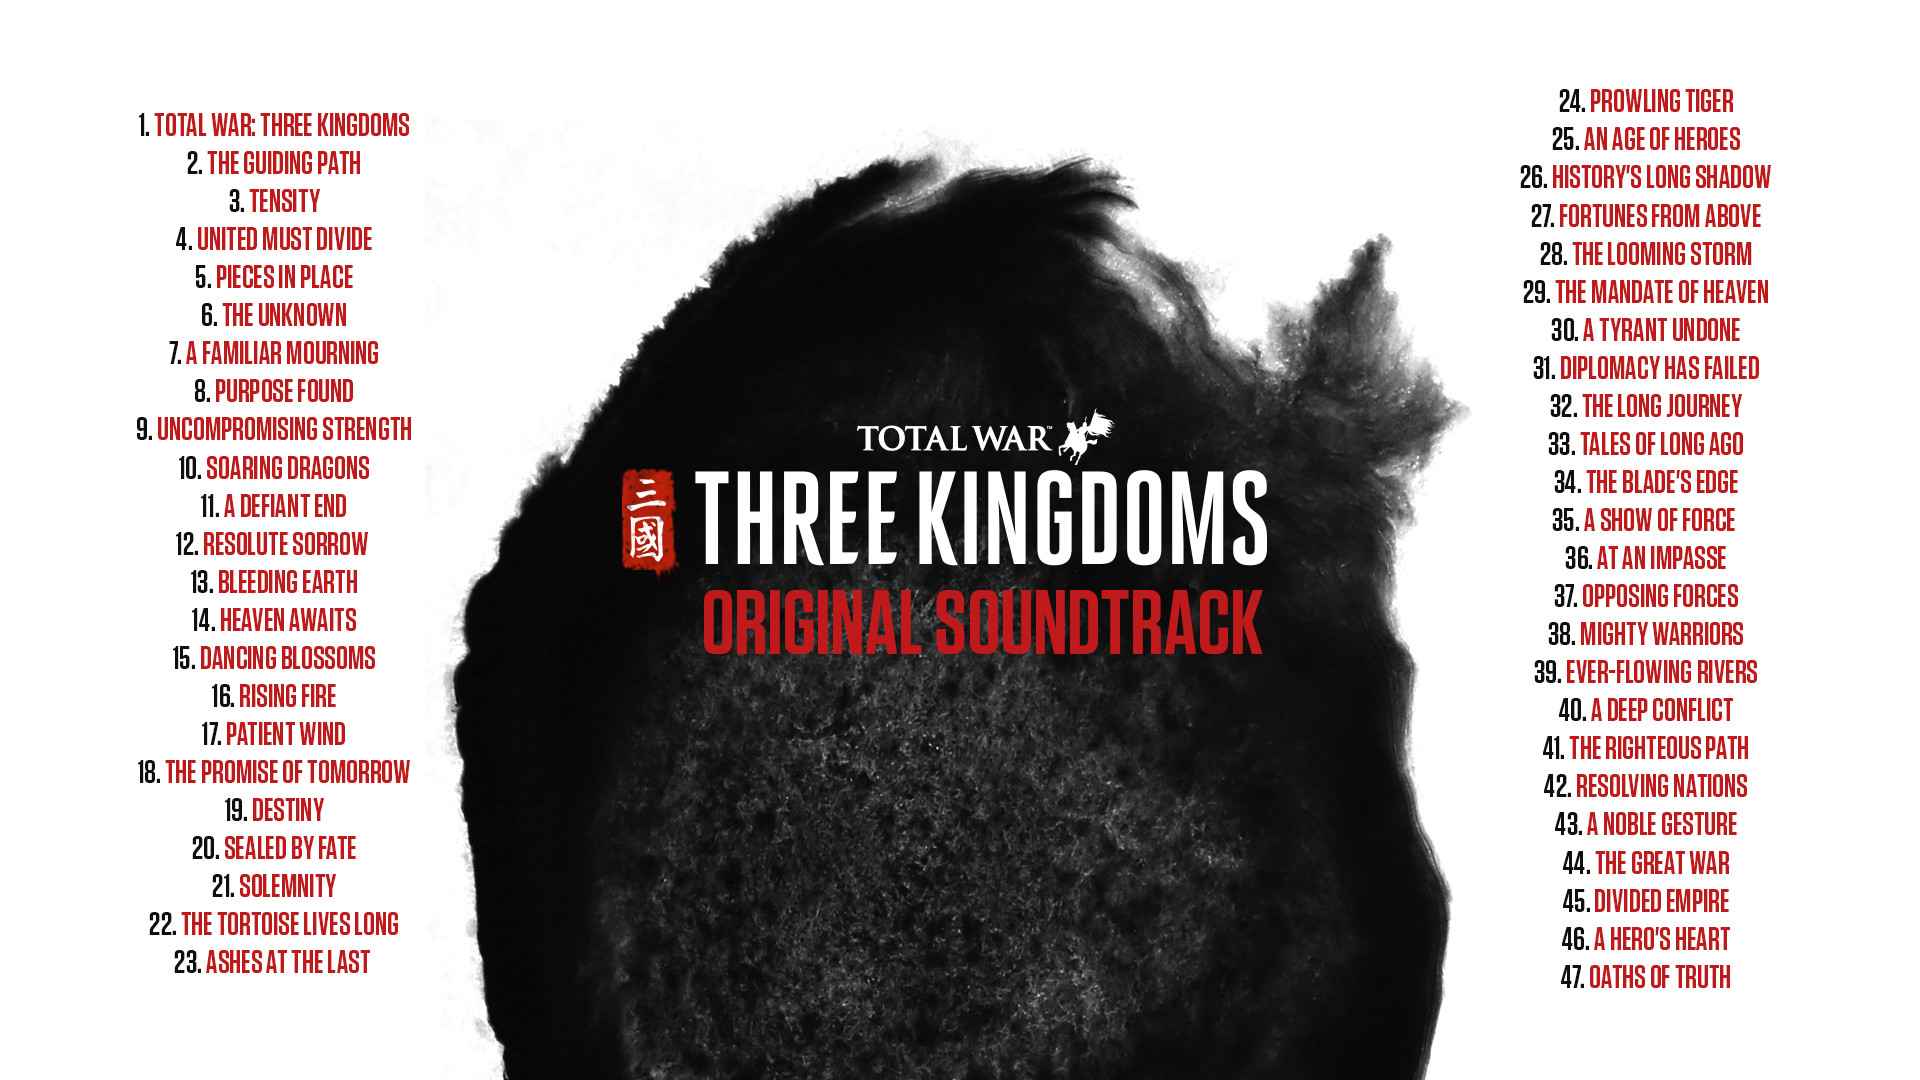 Total War: THREE KINGDOMS - Original Soundtrack on Steam